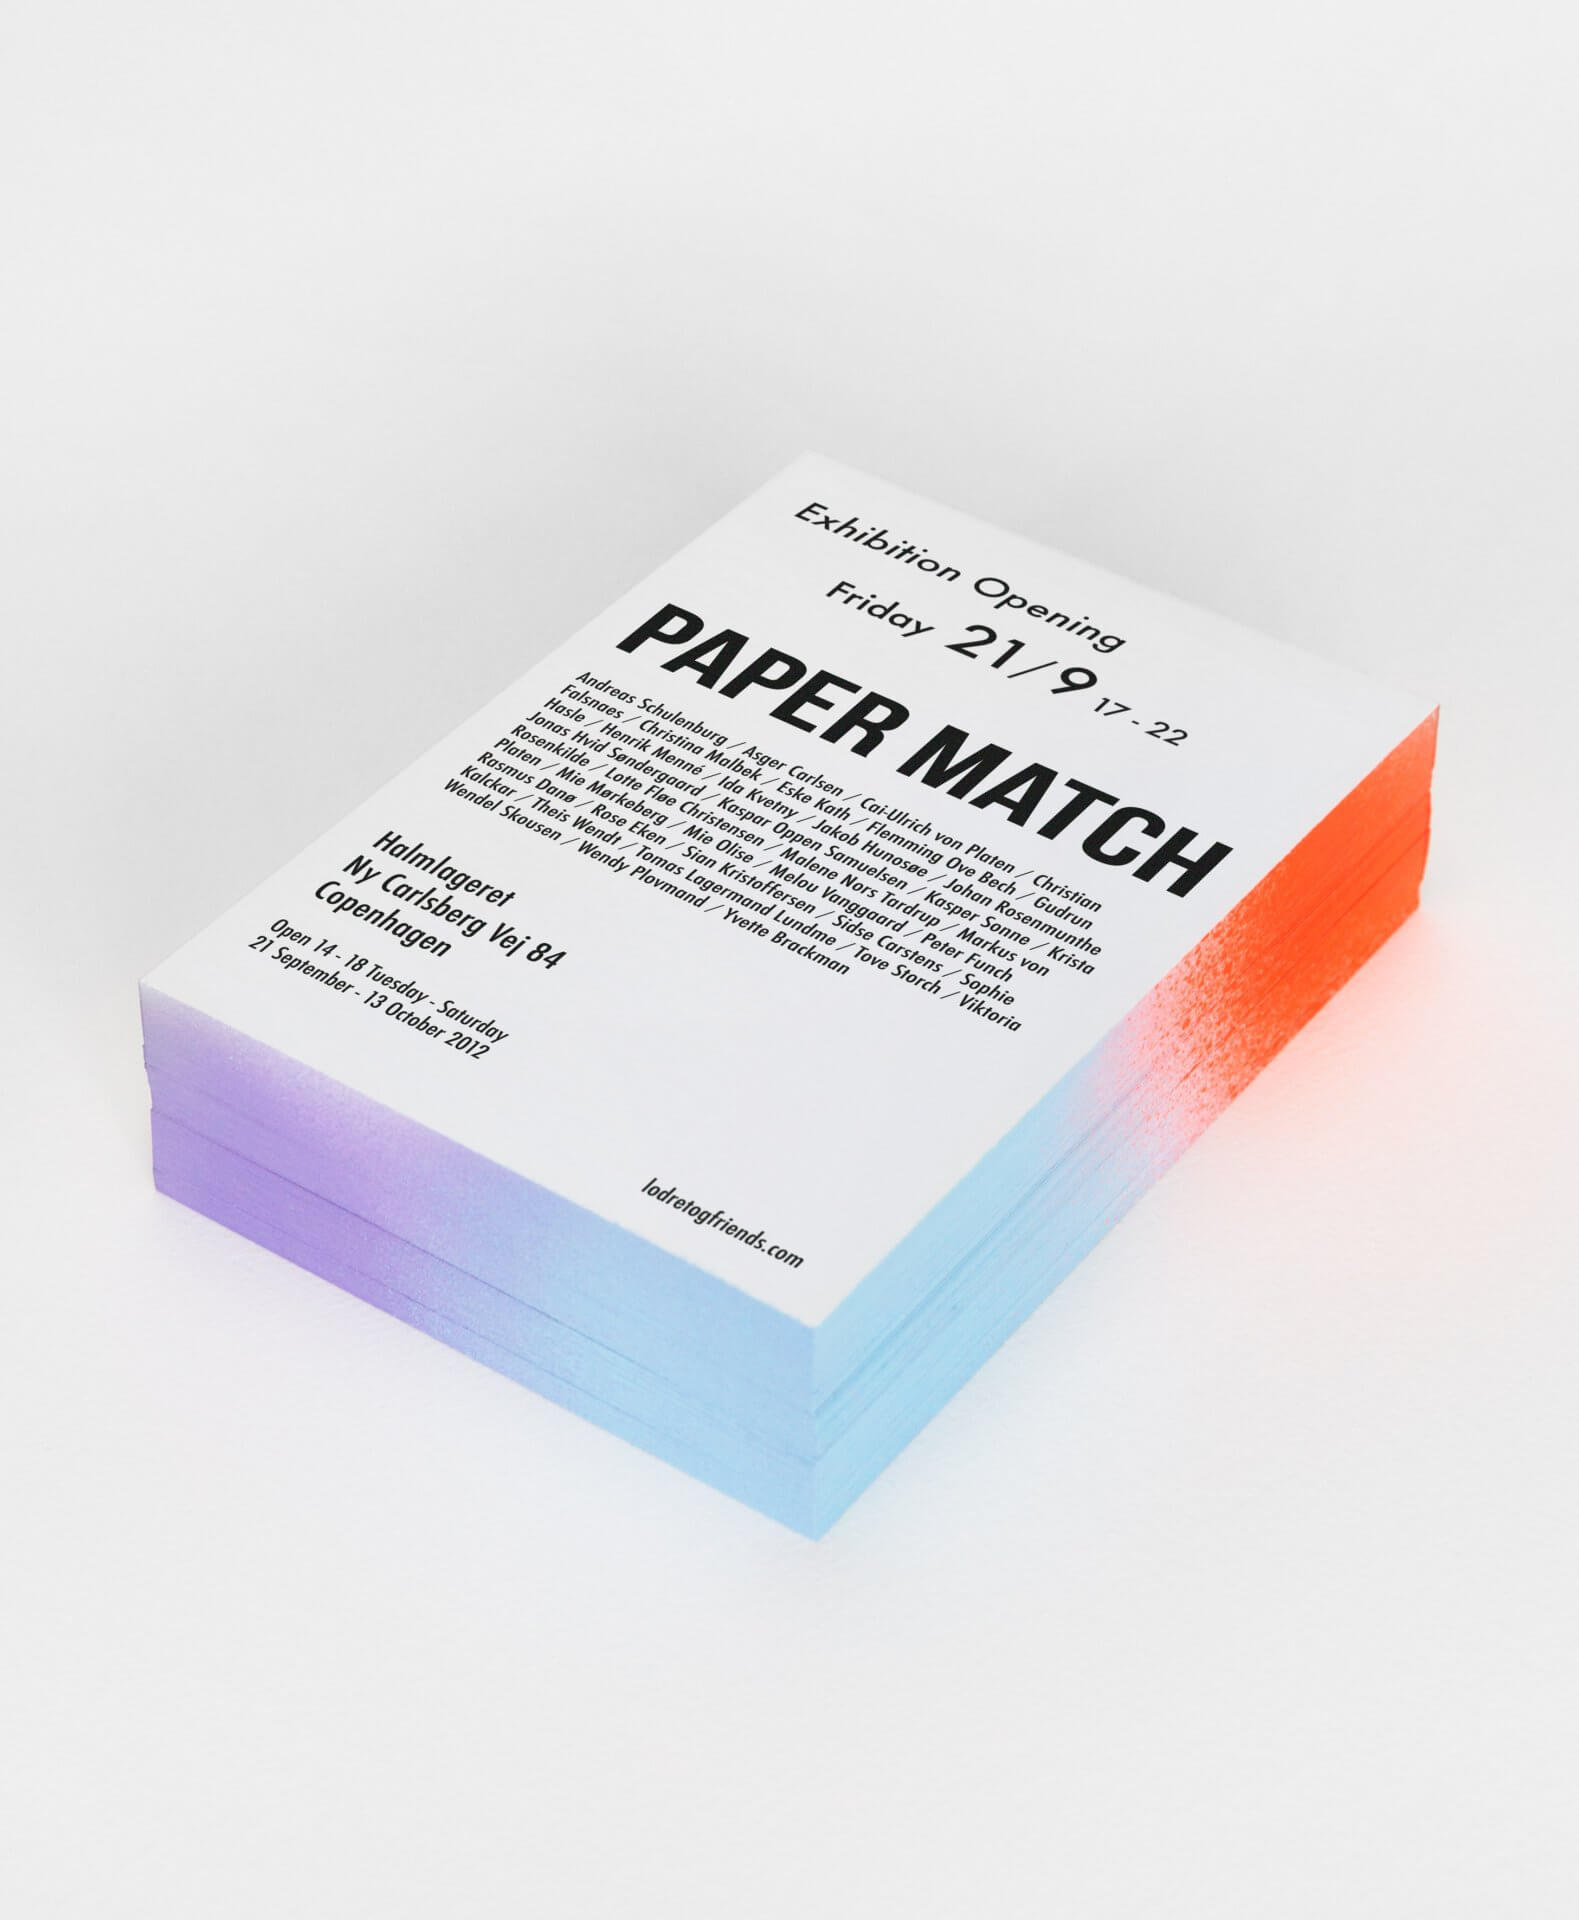 Paper Match (2012), Malene Nors Tardrup